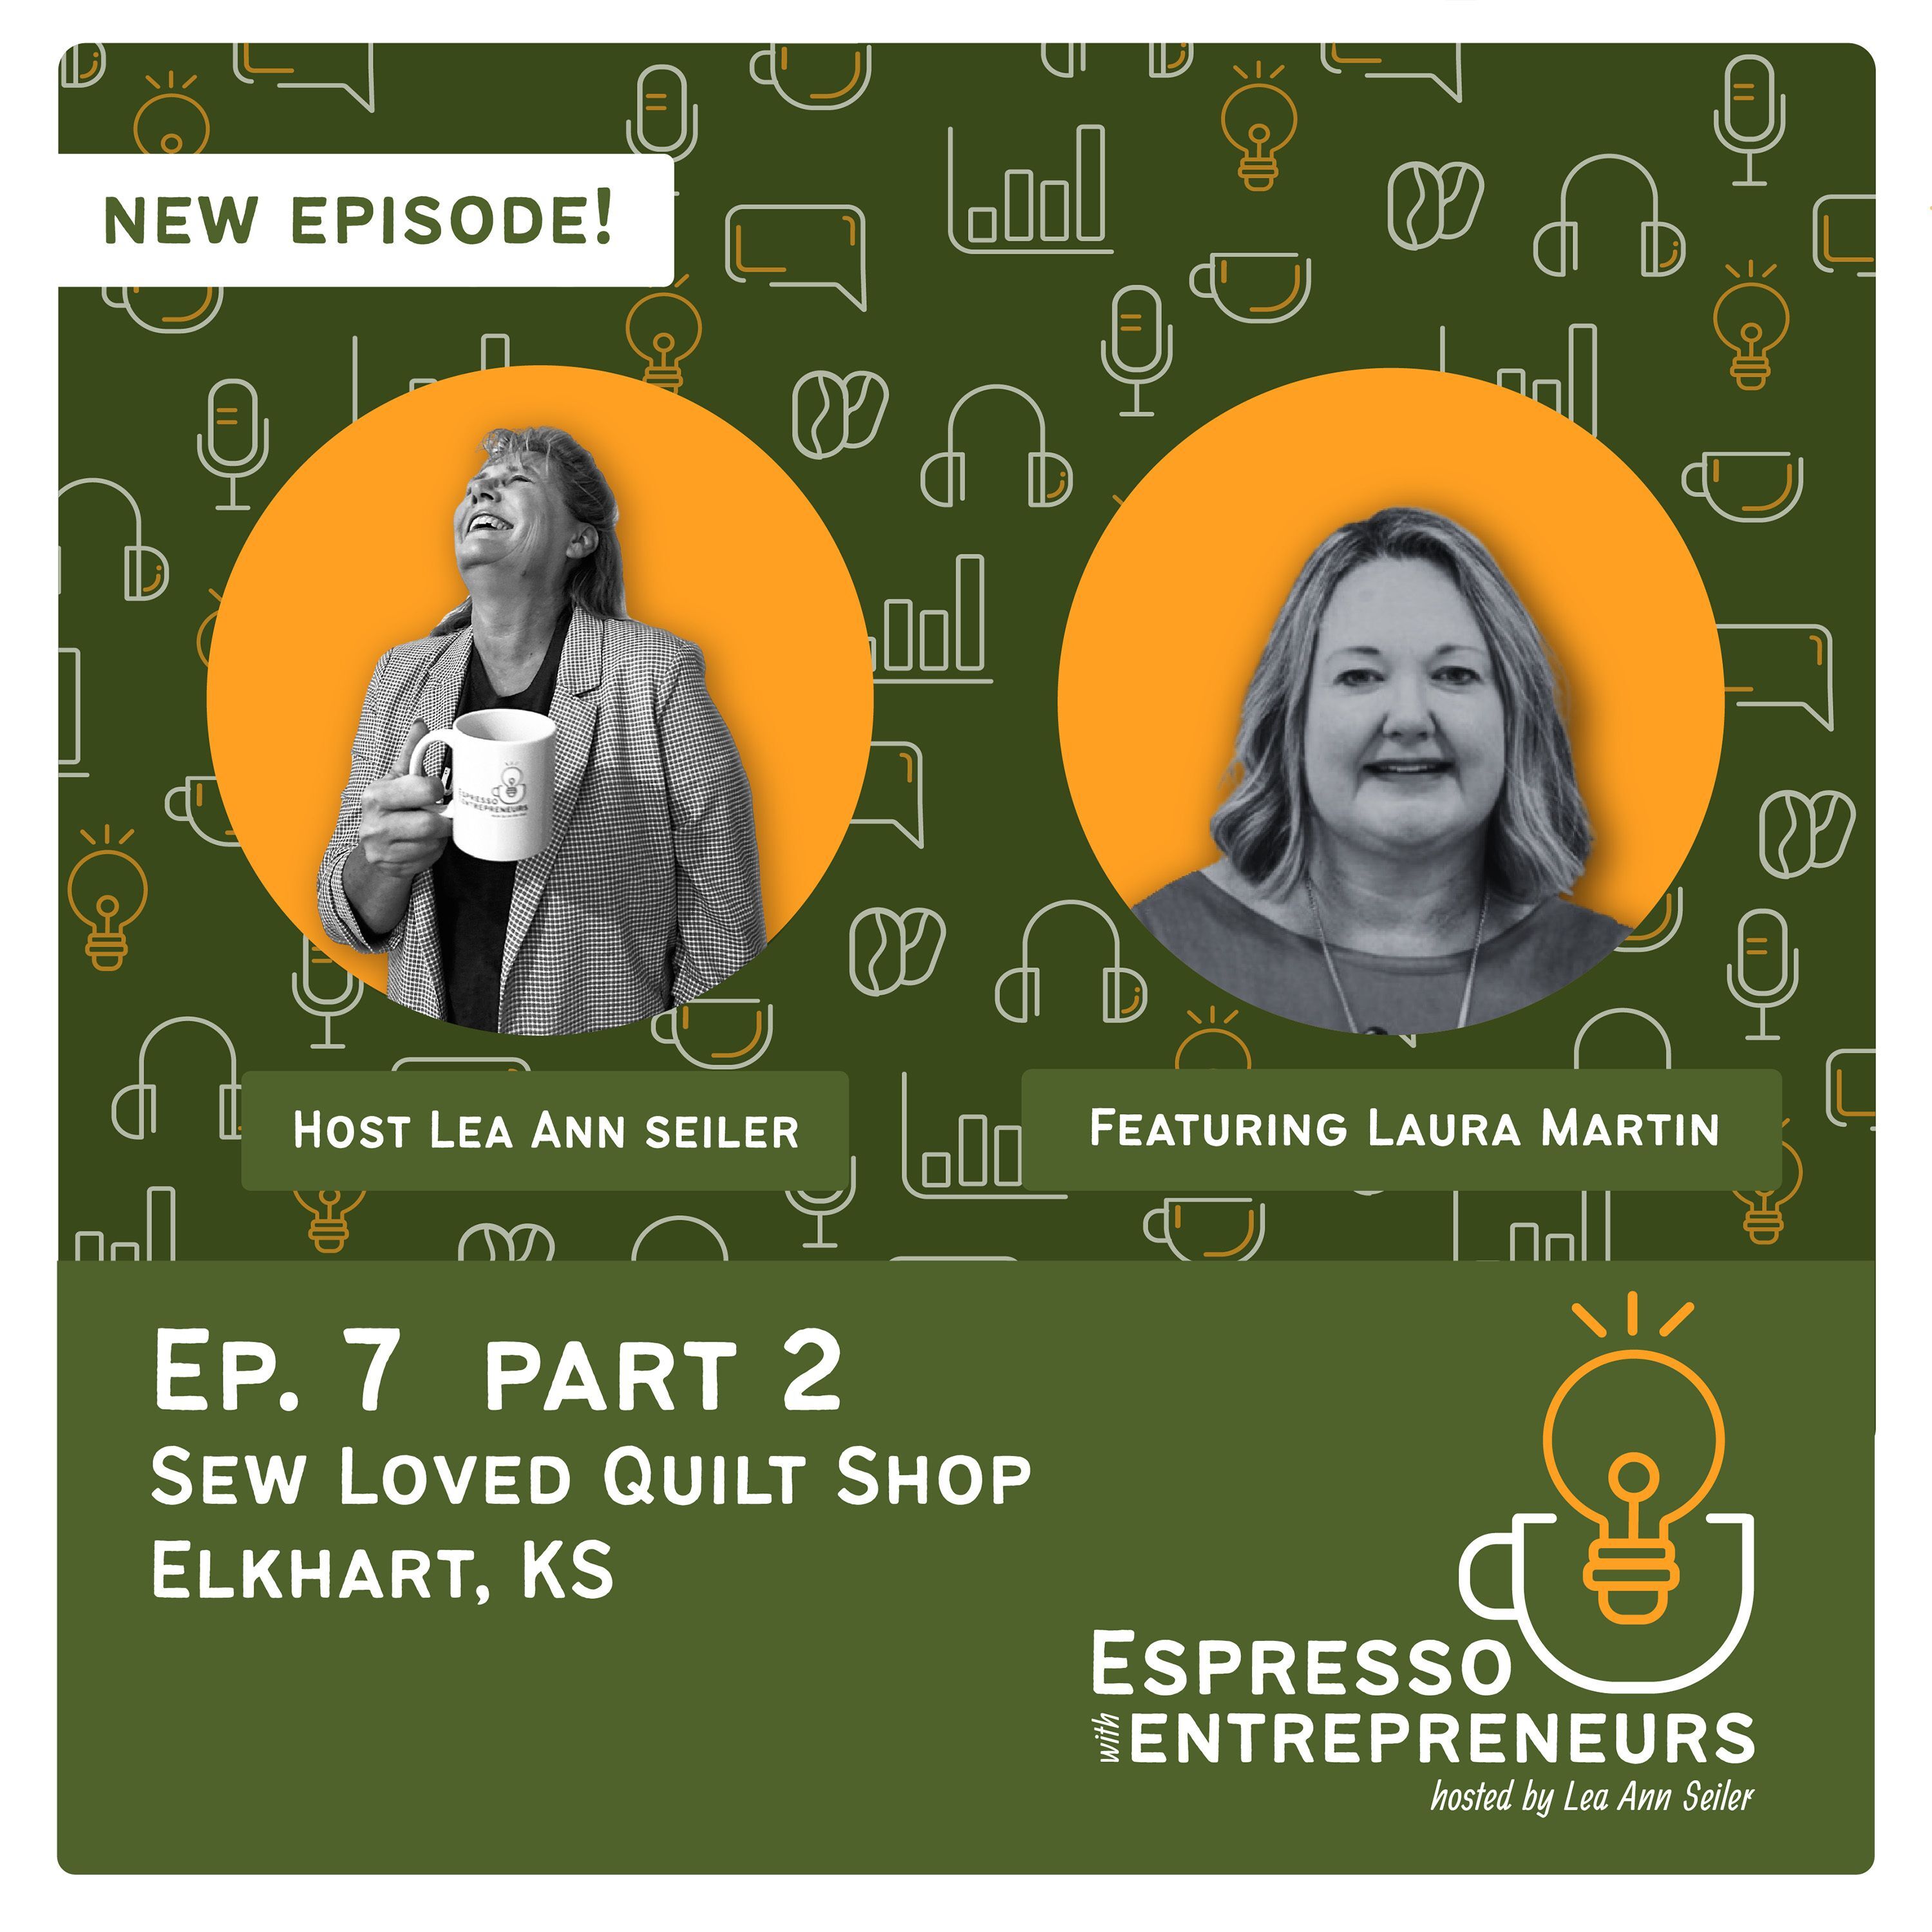 Espresso with Entrepreneurs: Laura Martin Part 2